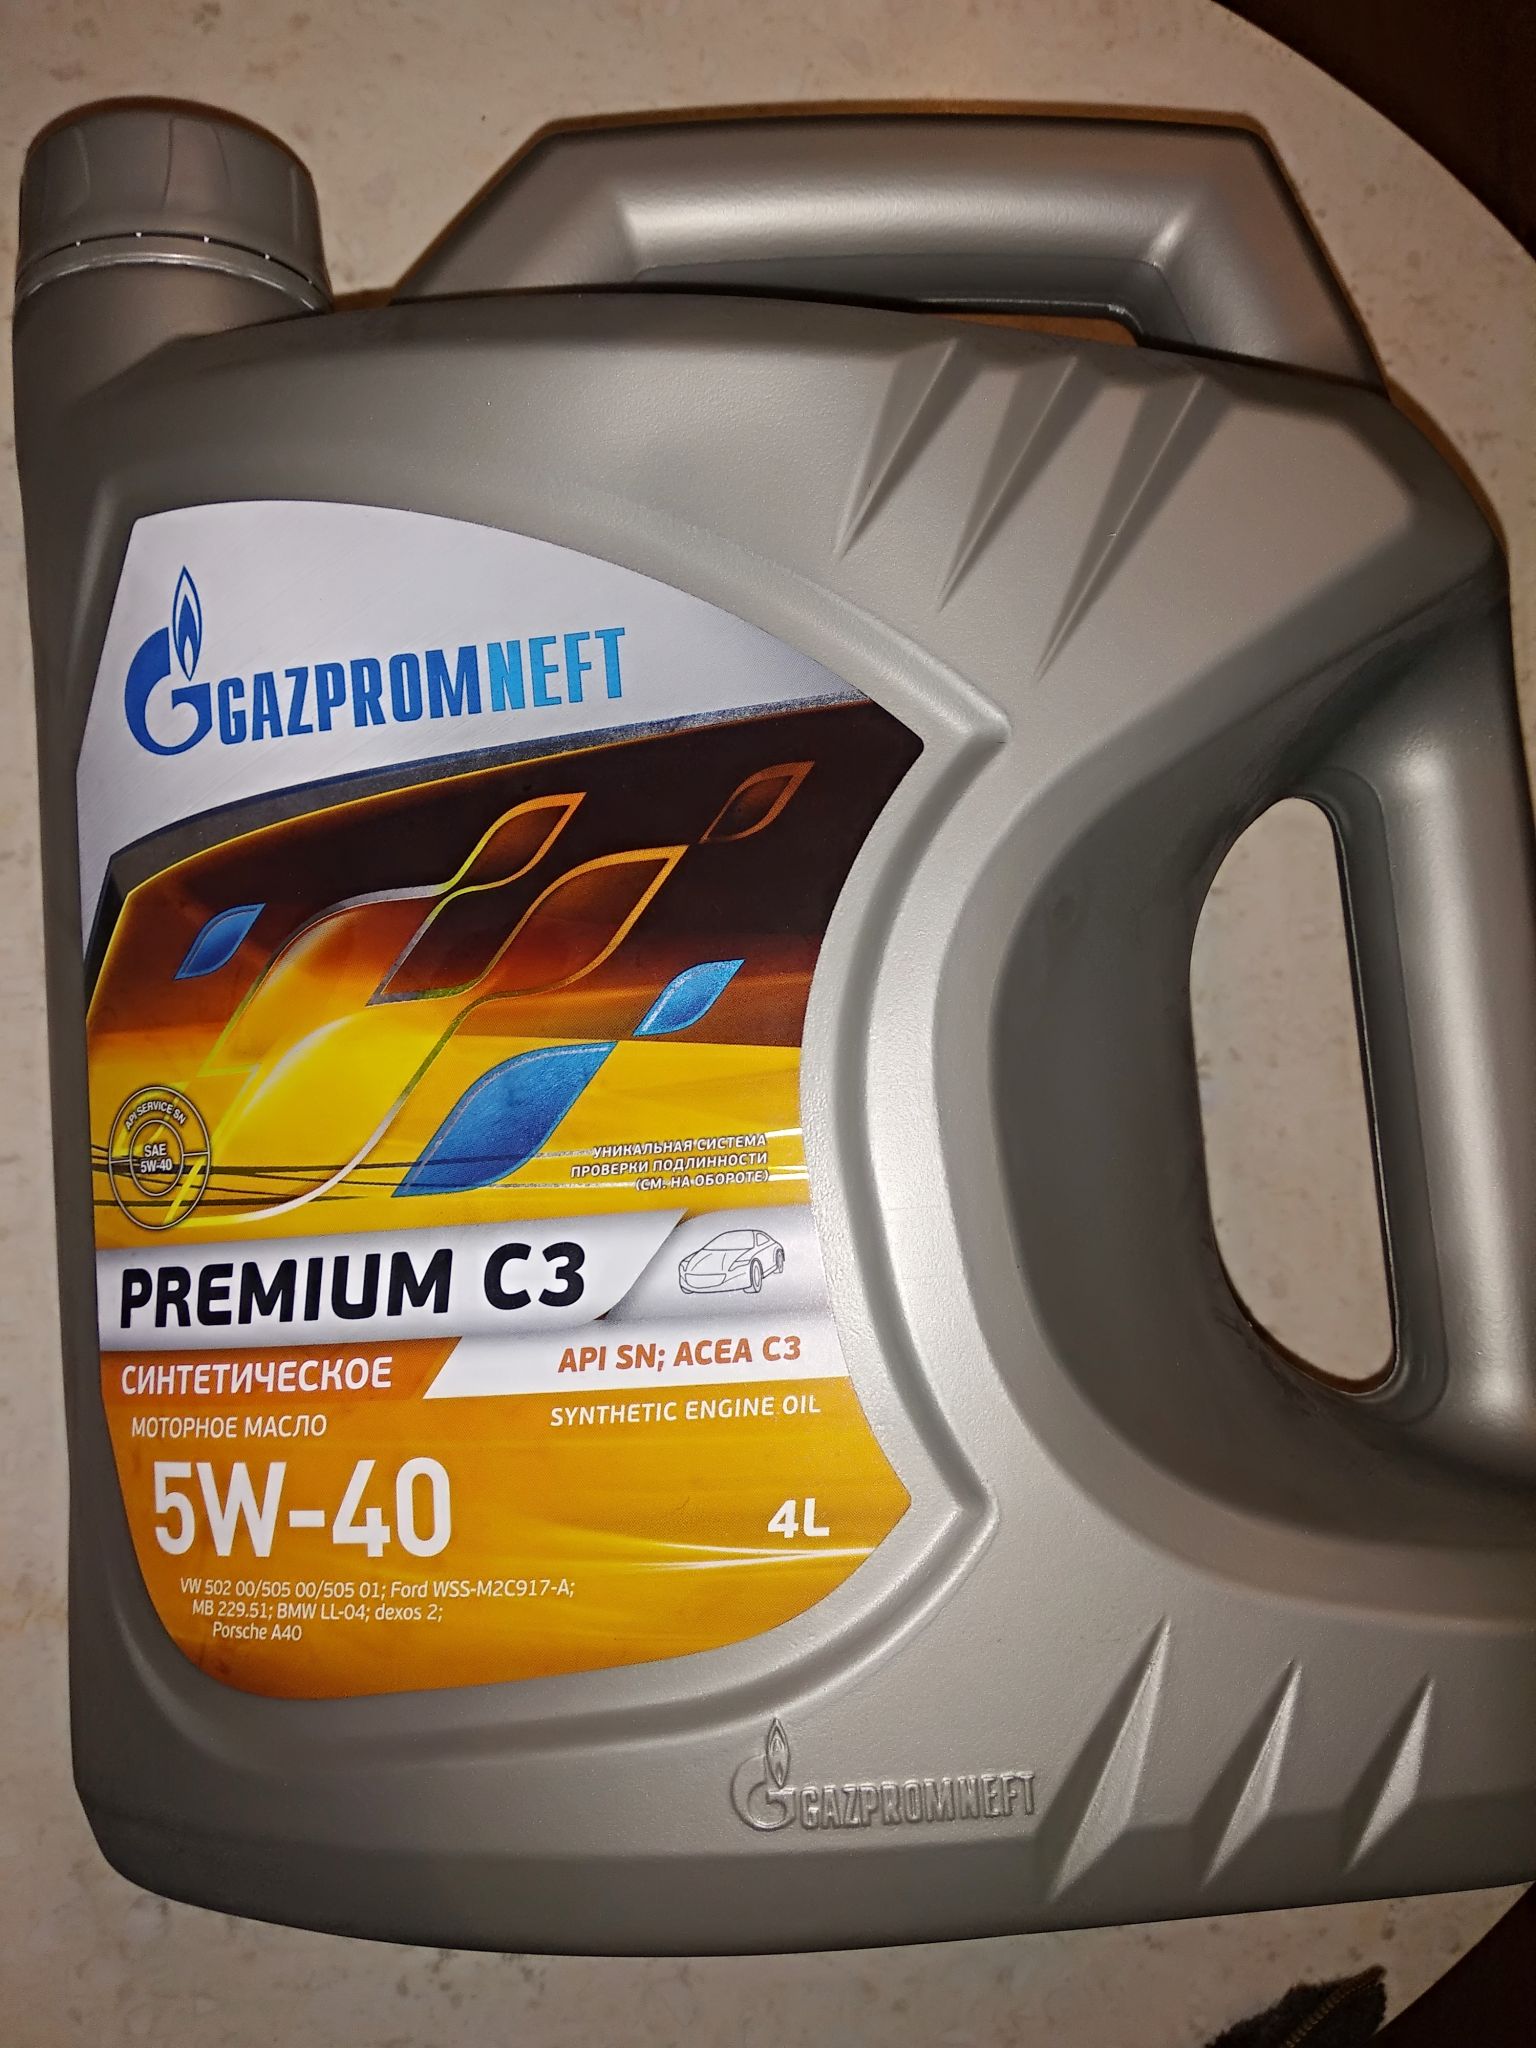 Масло gazpromneft premium 5w 30. Масло Газпромнефть 5w40 премиум. Gazpromneft Premium n 5w40 4л. Gazpromneft Premium c3 5w-40.